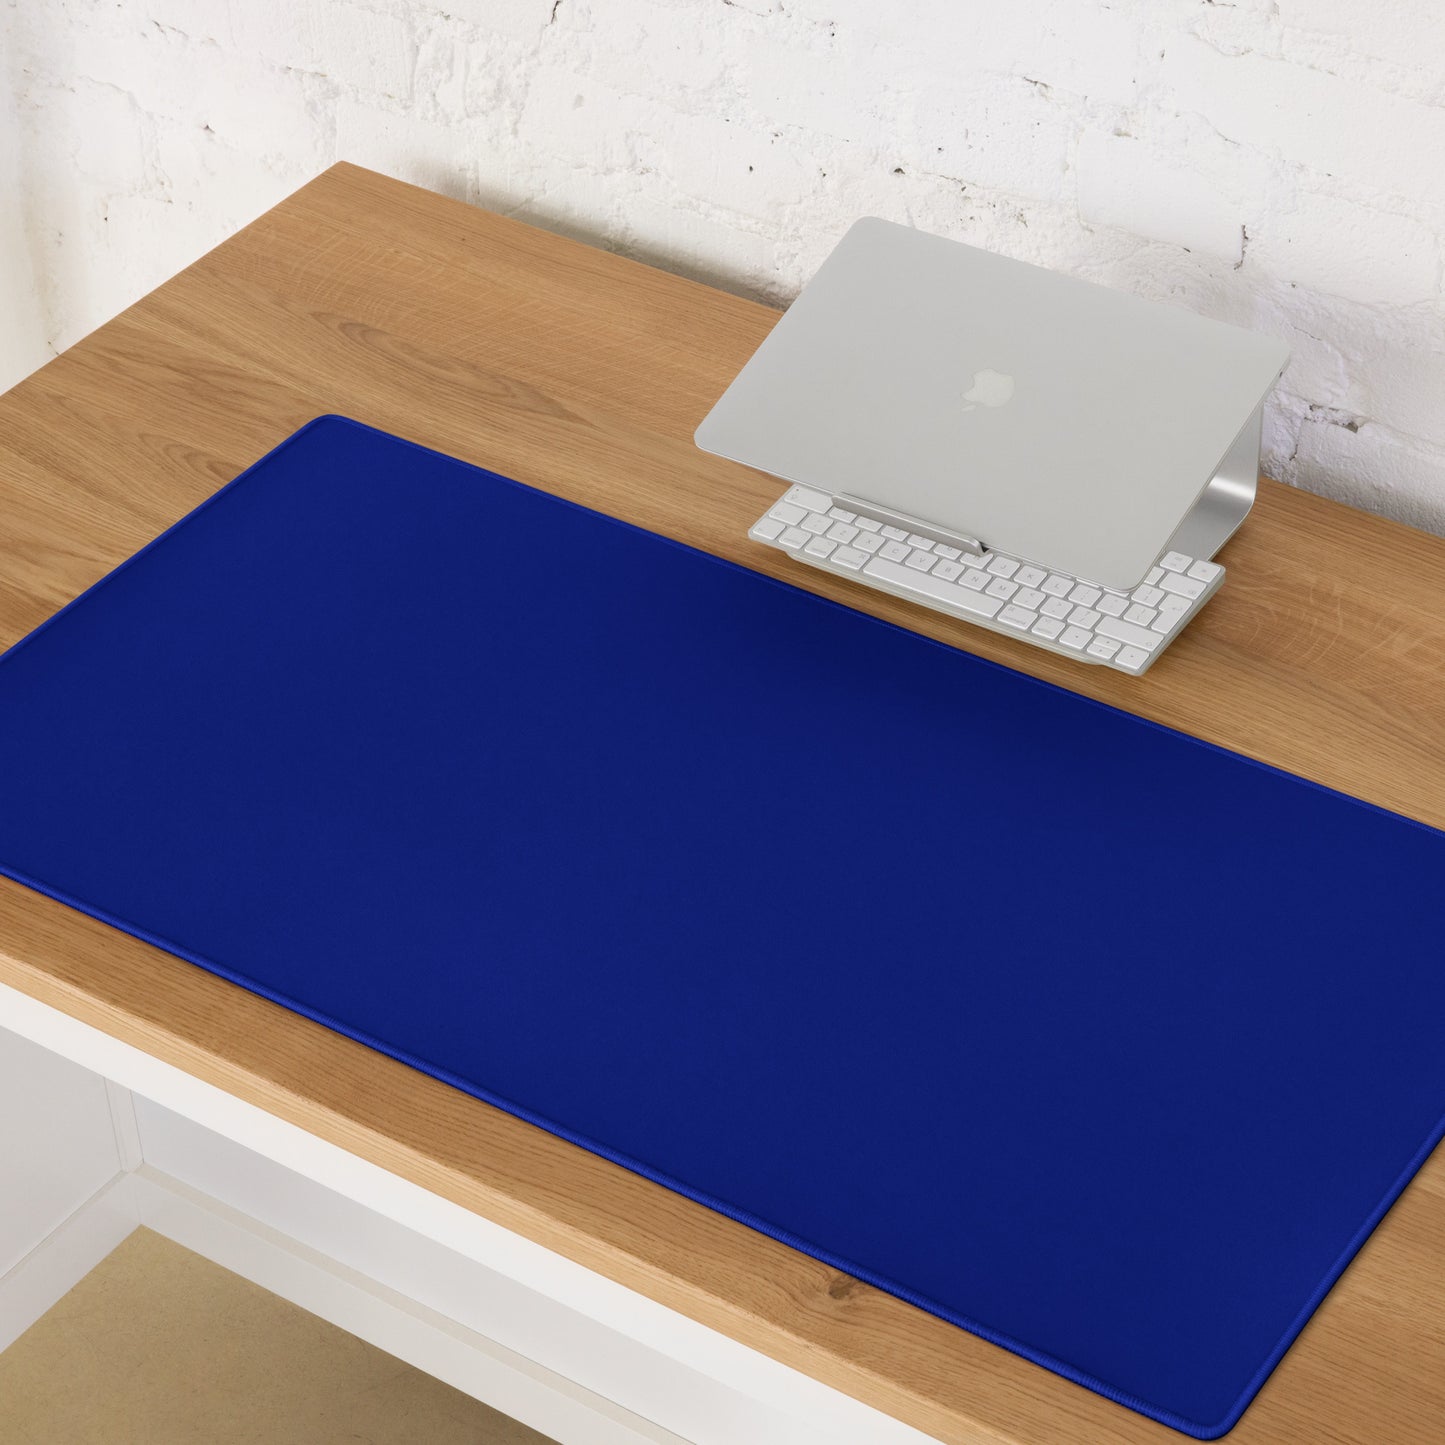 Reflex Blue Desk Pad